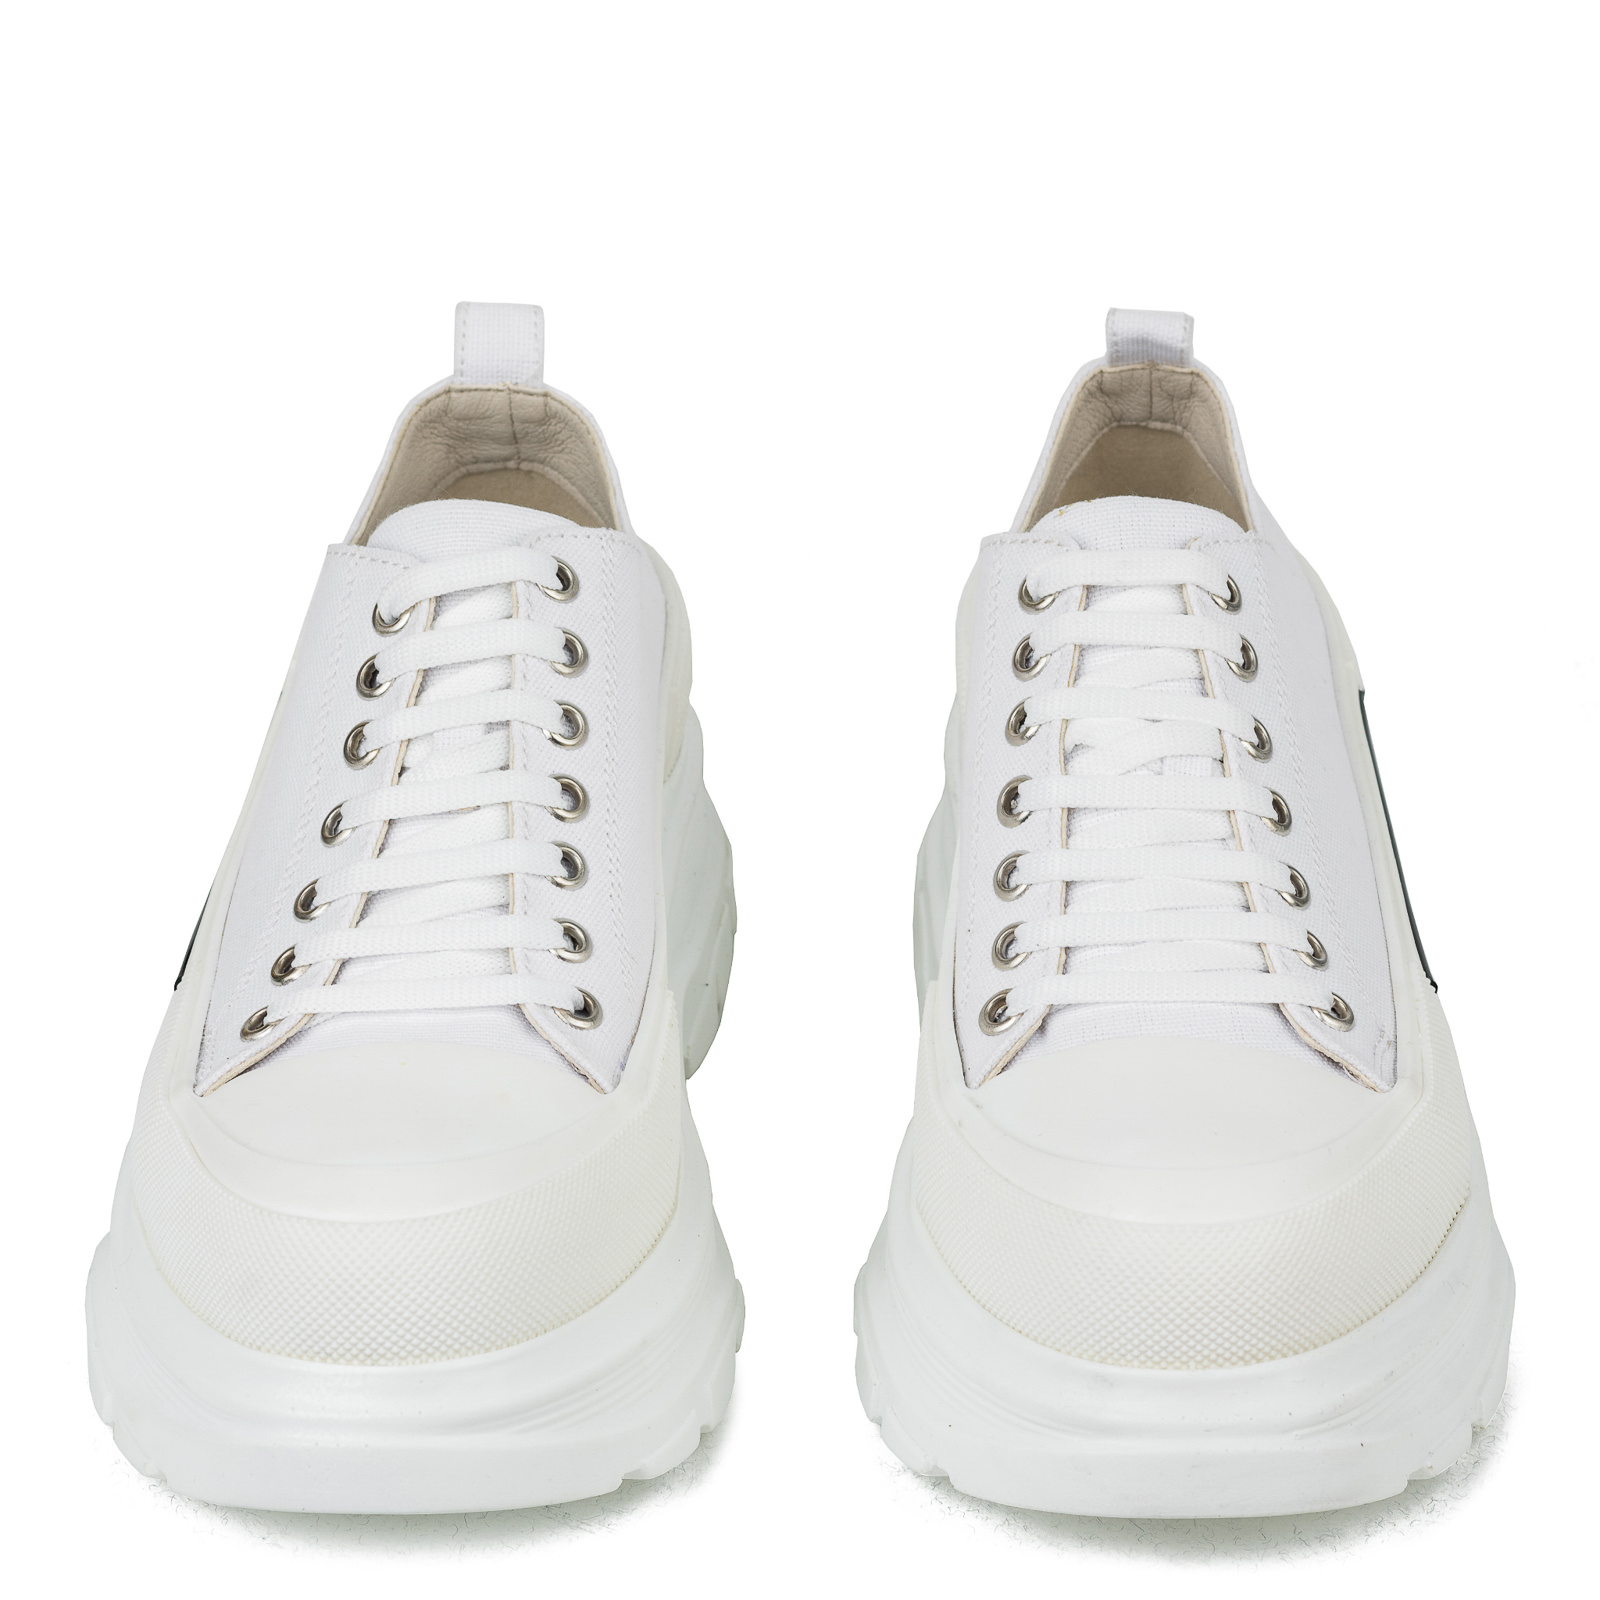 Women sneakers B396 - WHITE